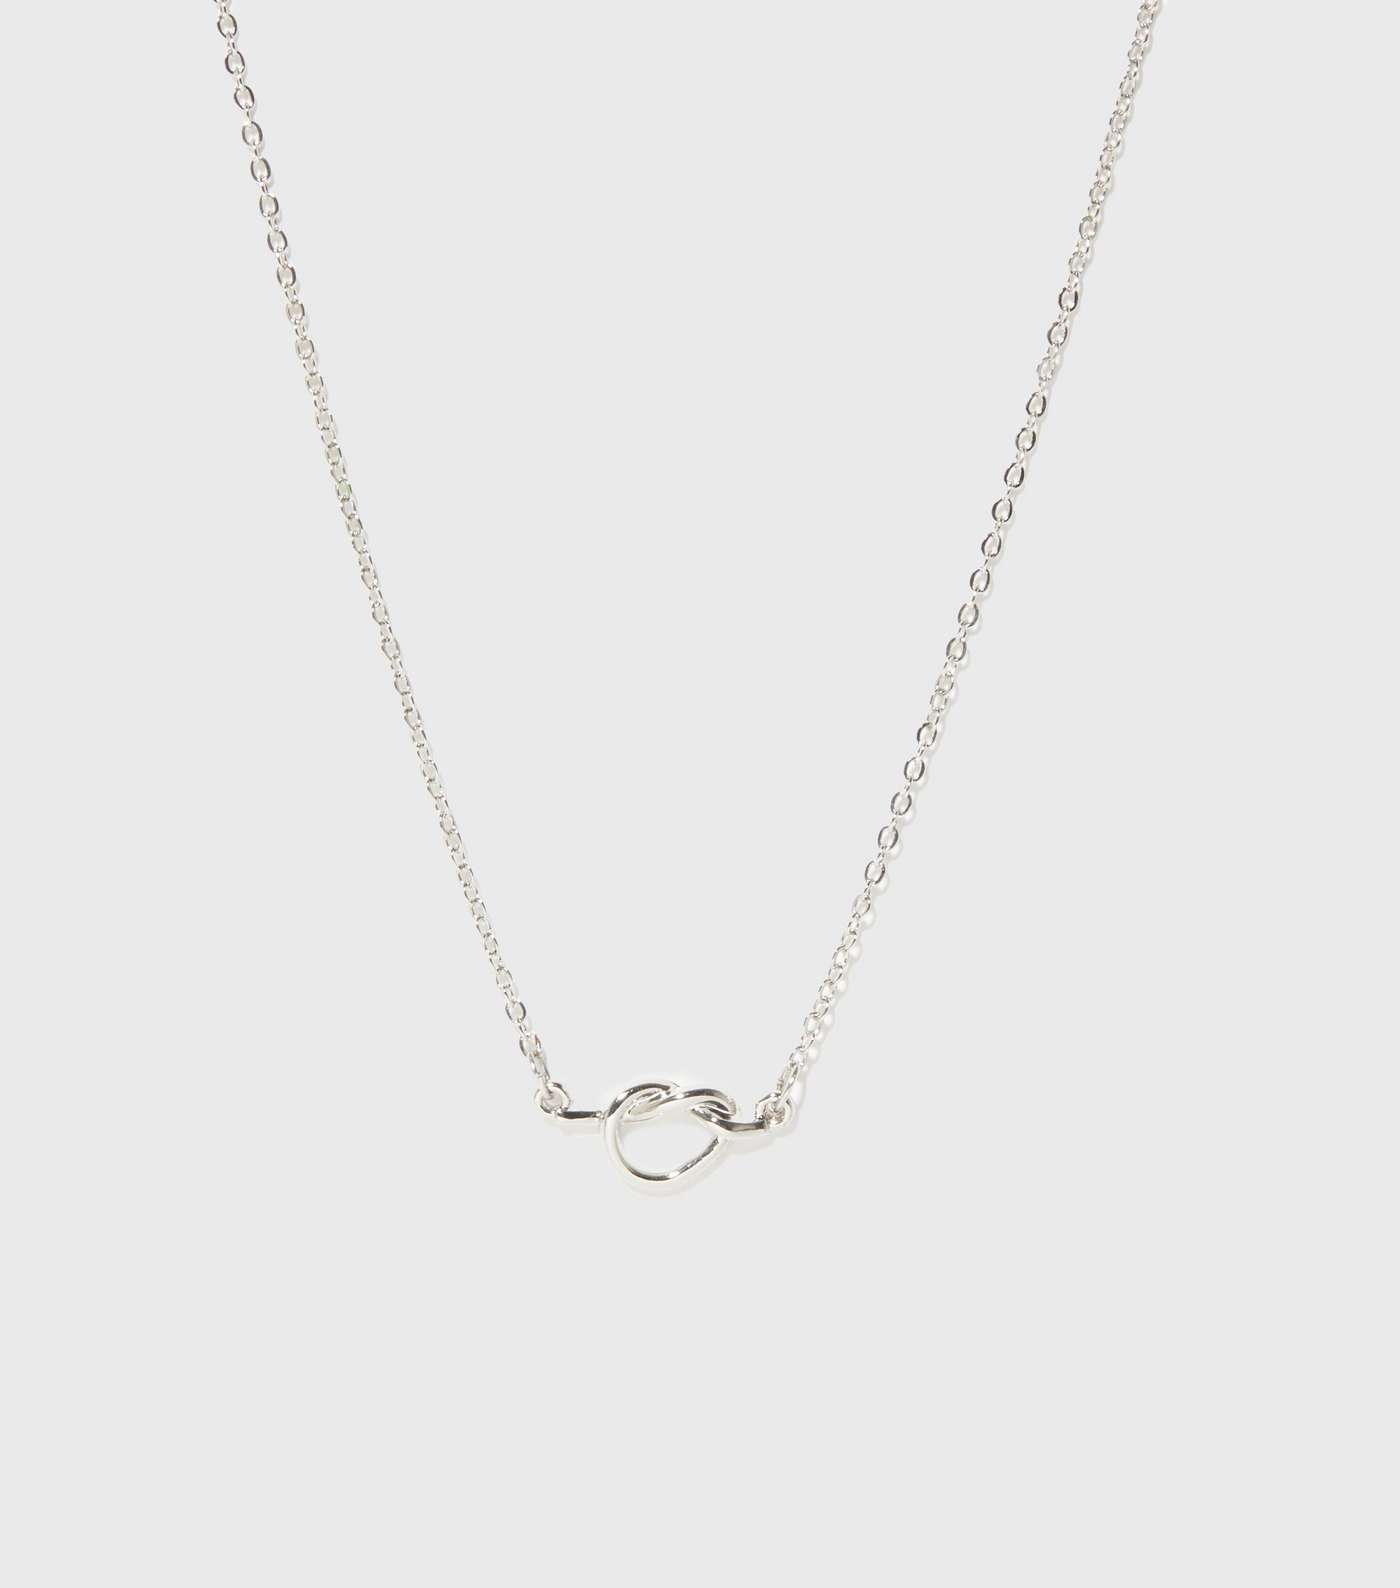 Silver Friendship Knot Pendant Necklace Image 2